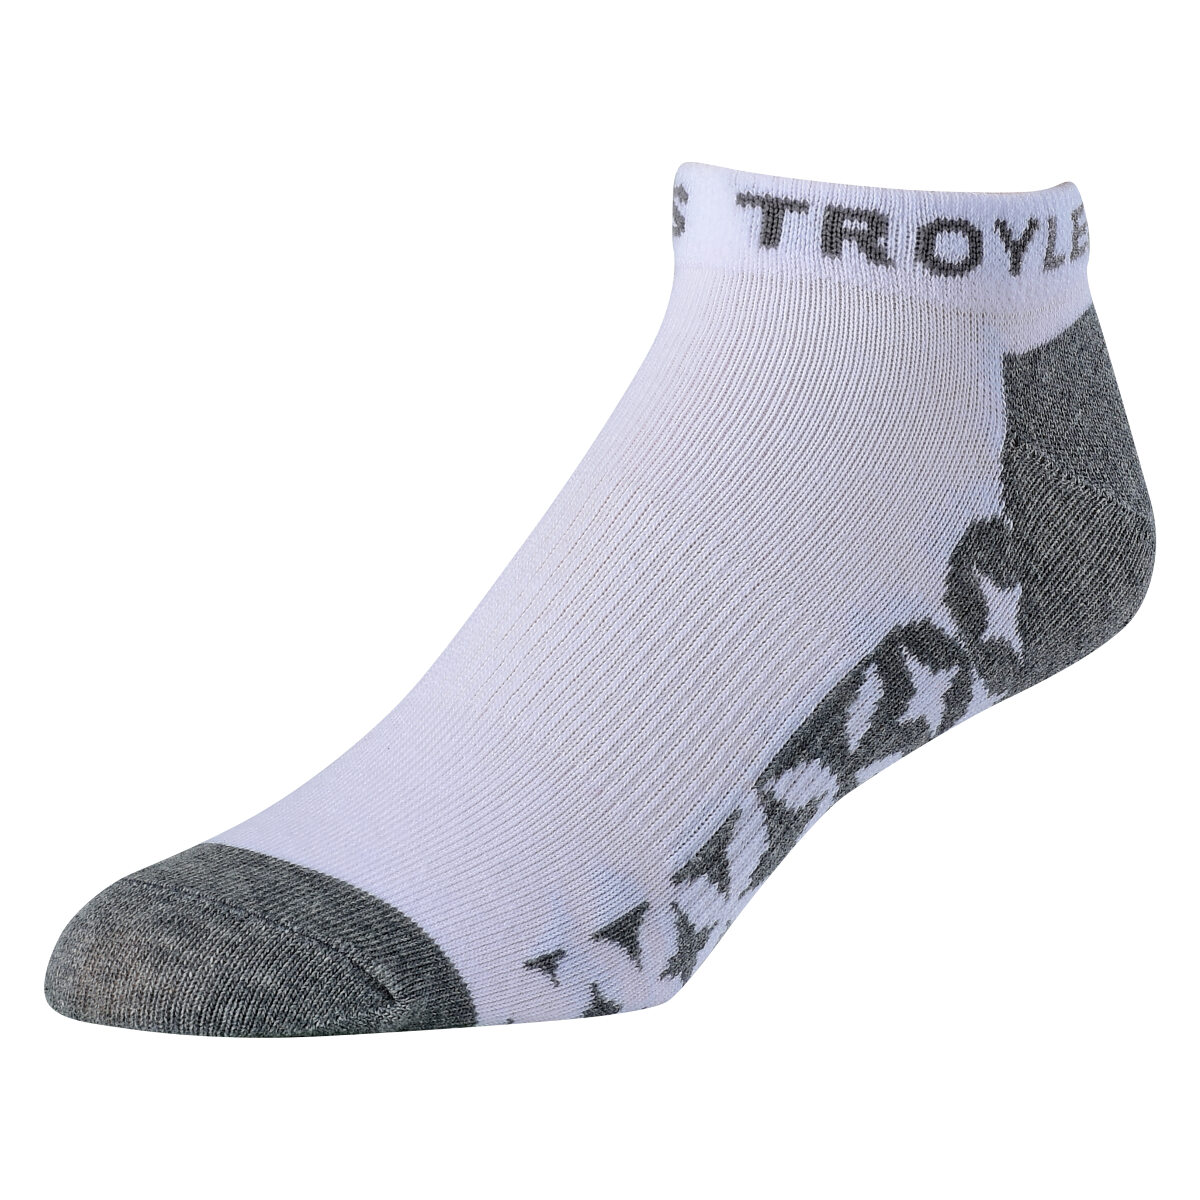 Troy Lee Designs Socken Starburst Ankle Weiß, 3er Pack